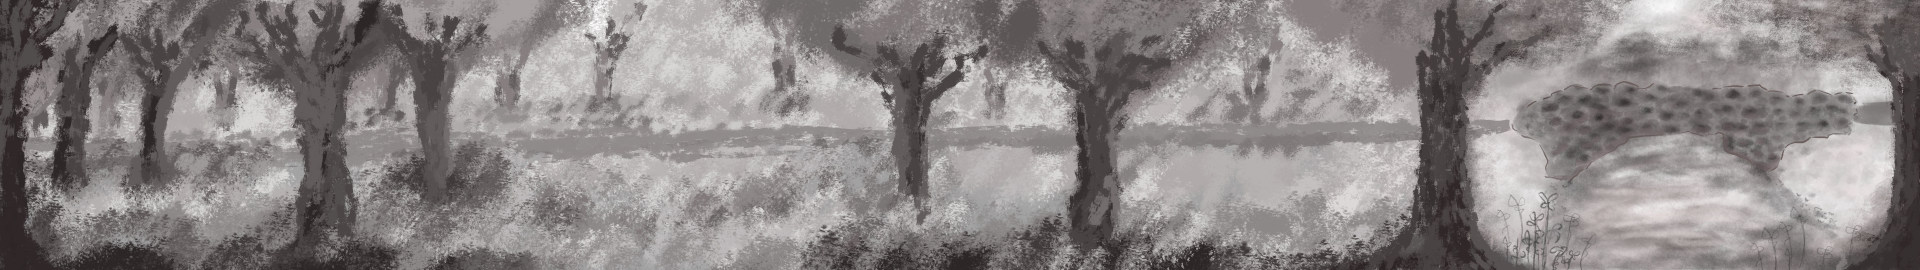 Monochrome illustration of countryside